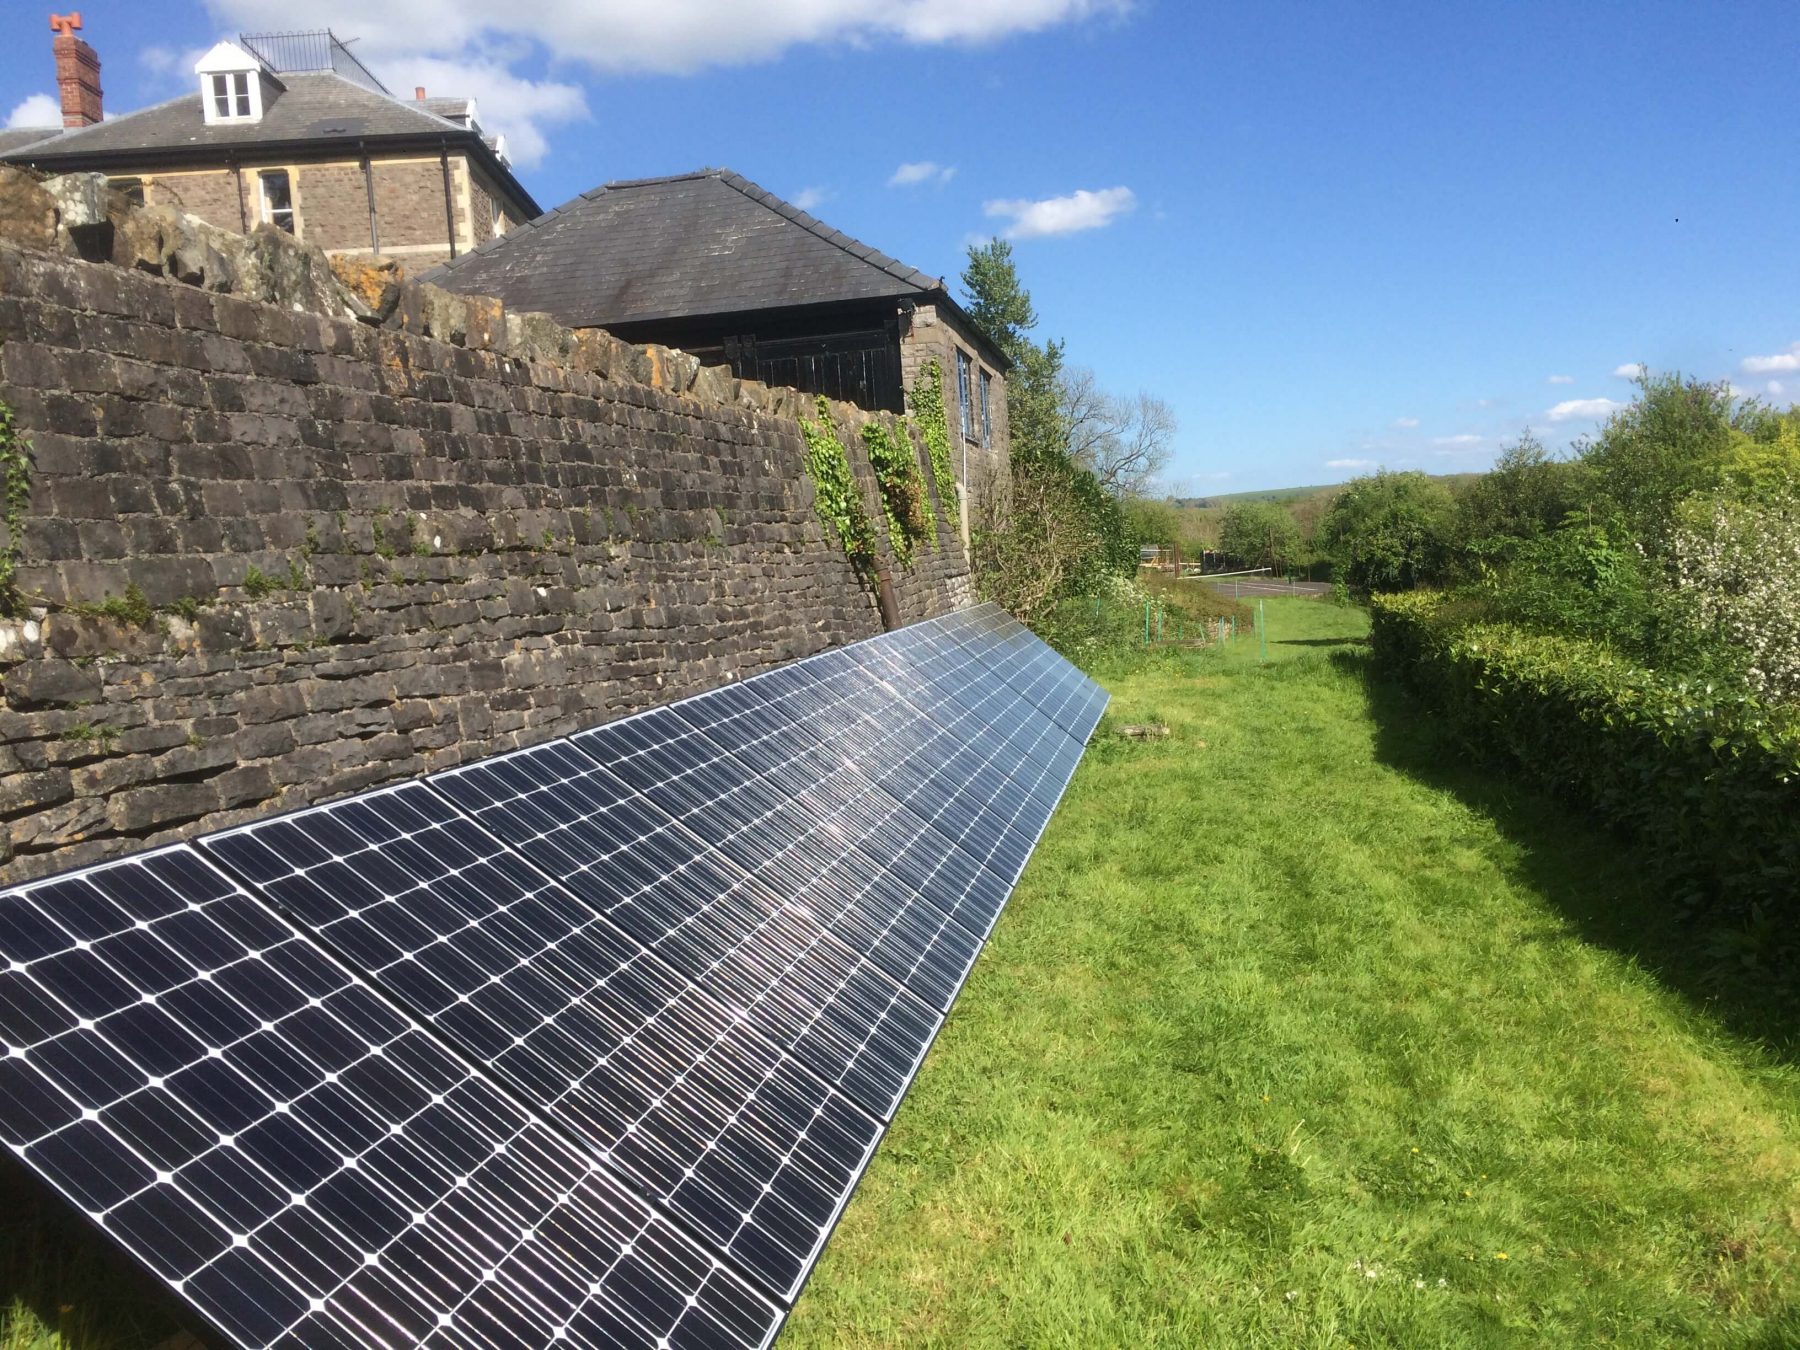 Ground mounted solar PV panels